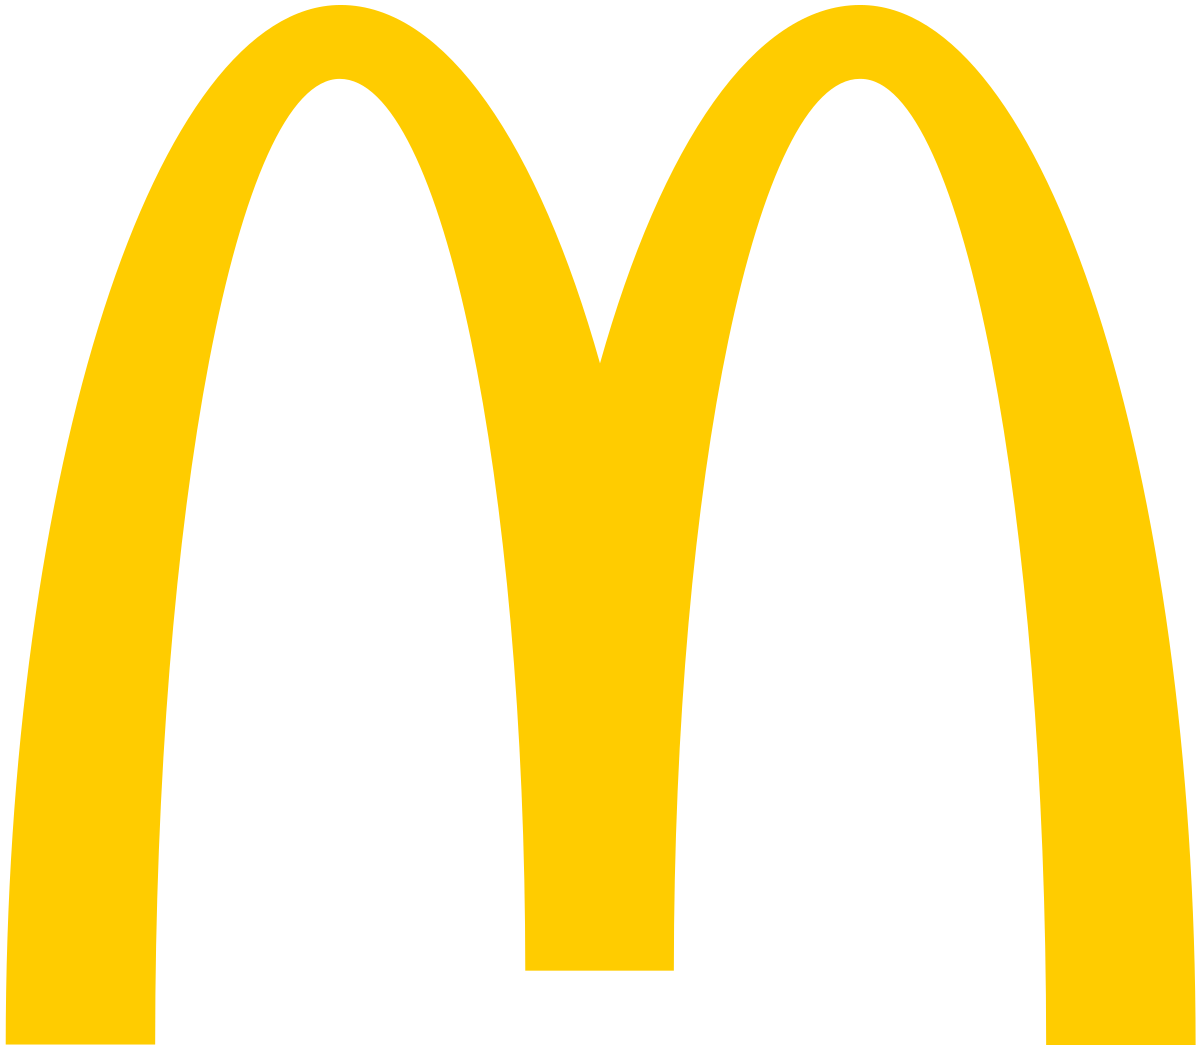 Logo Mcd - KibrisPDR